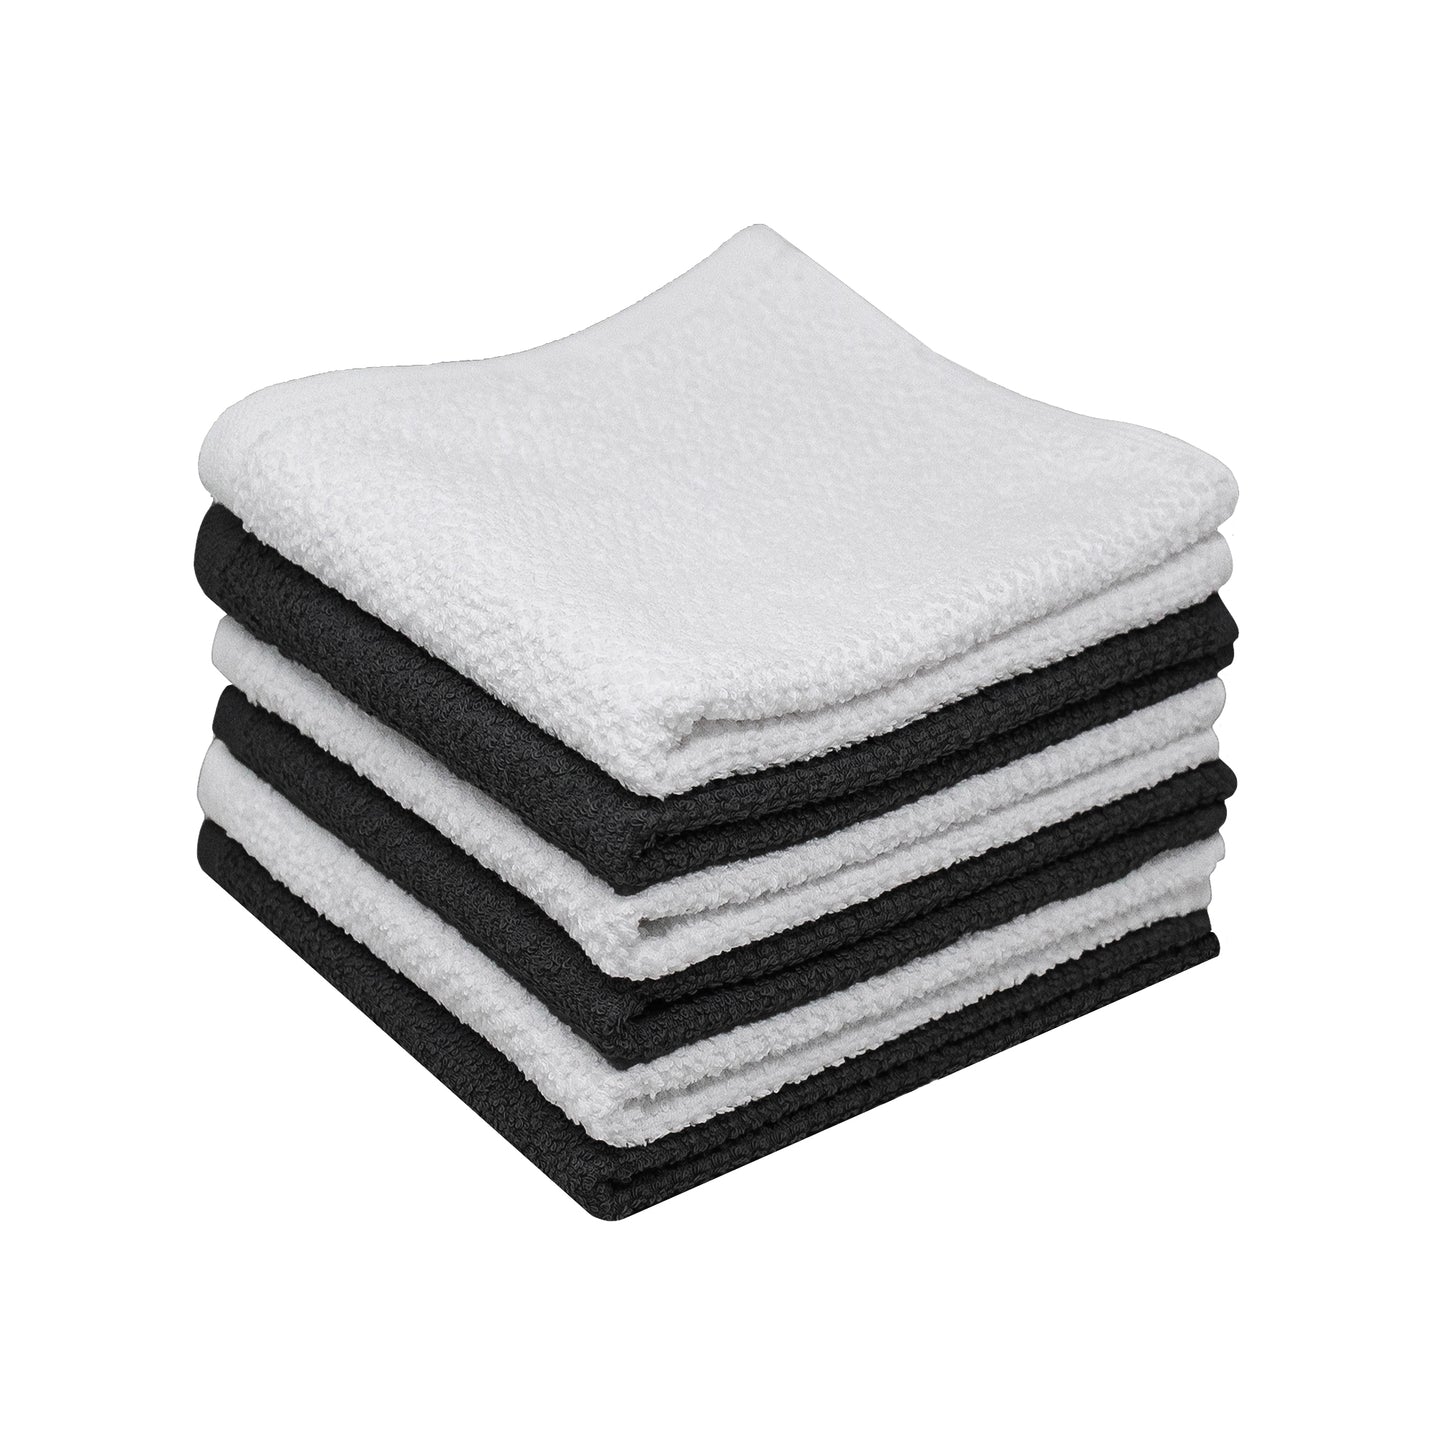 BleachSafe® Chef Weave Kitchen Towel 6-pack